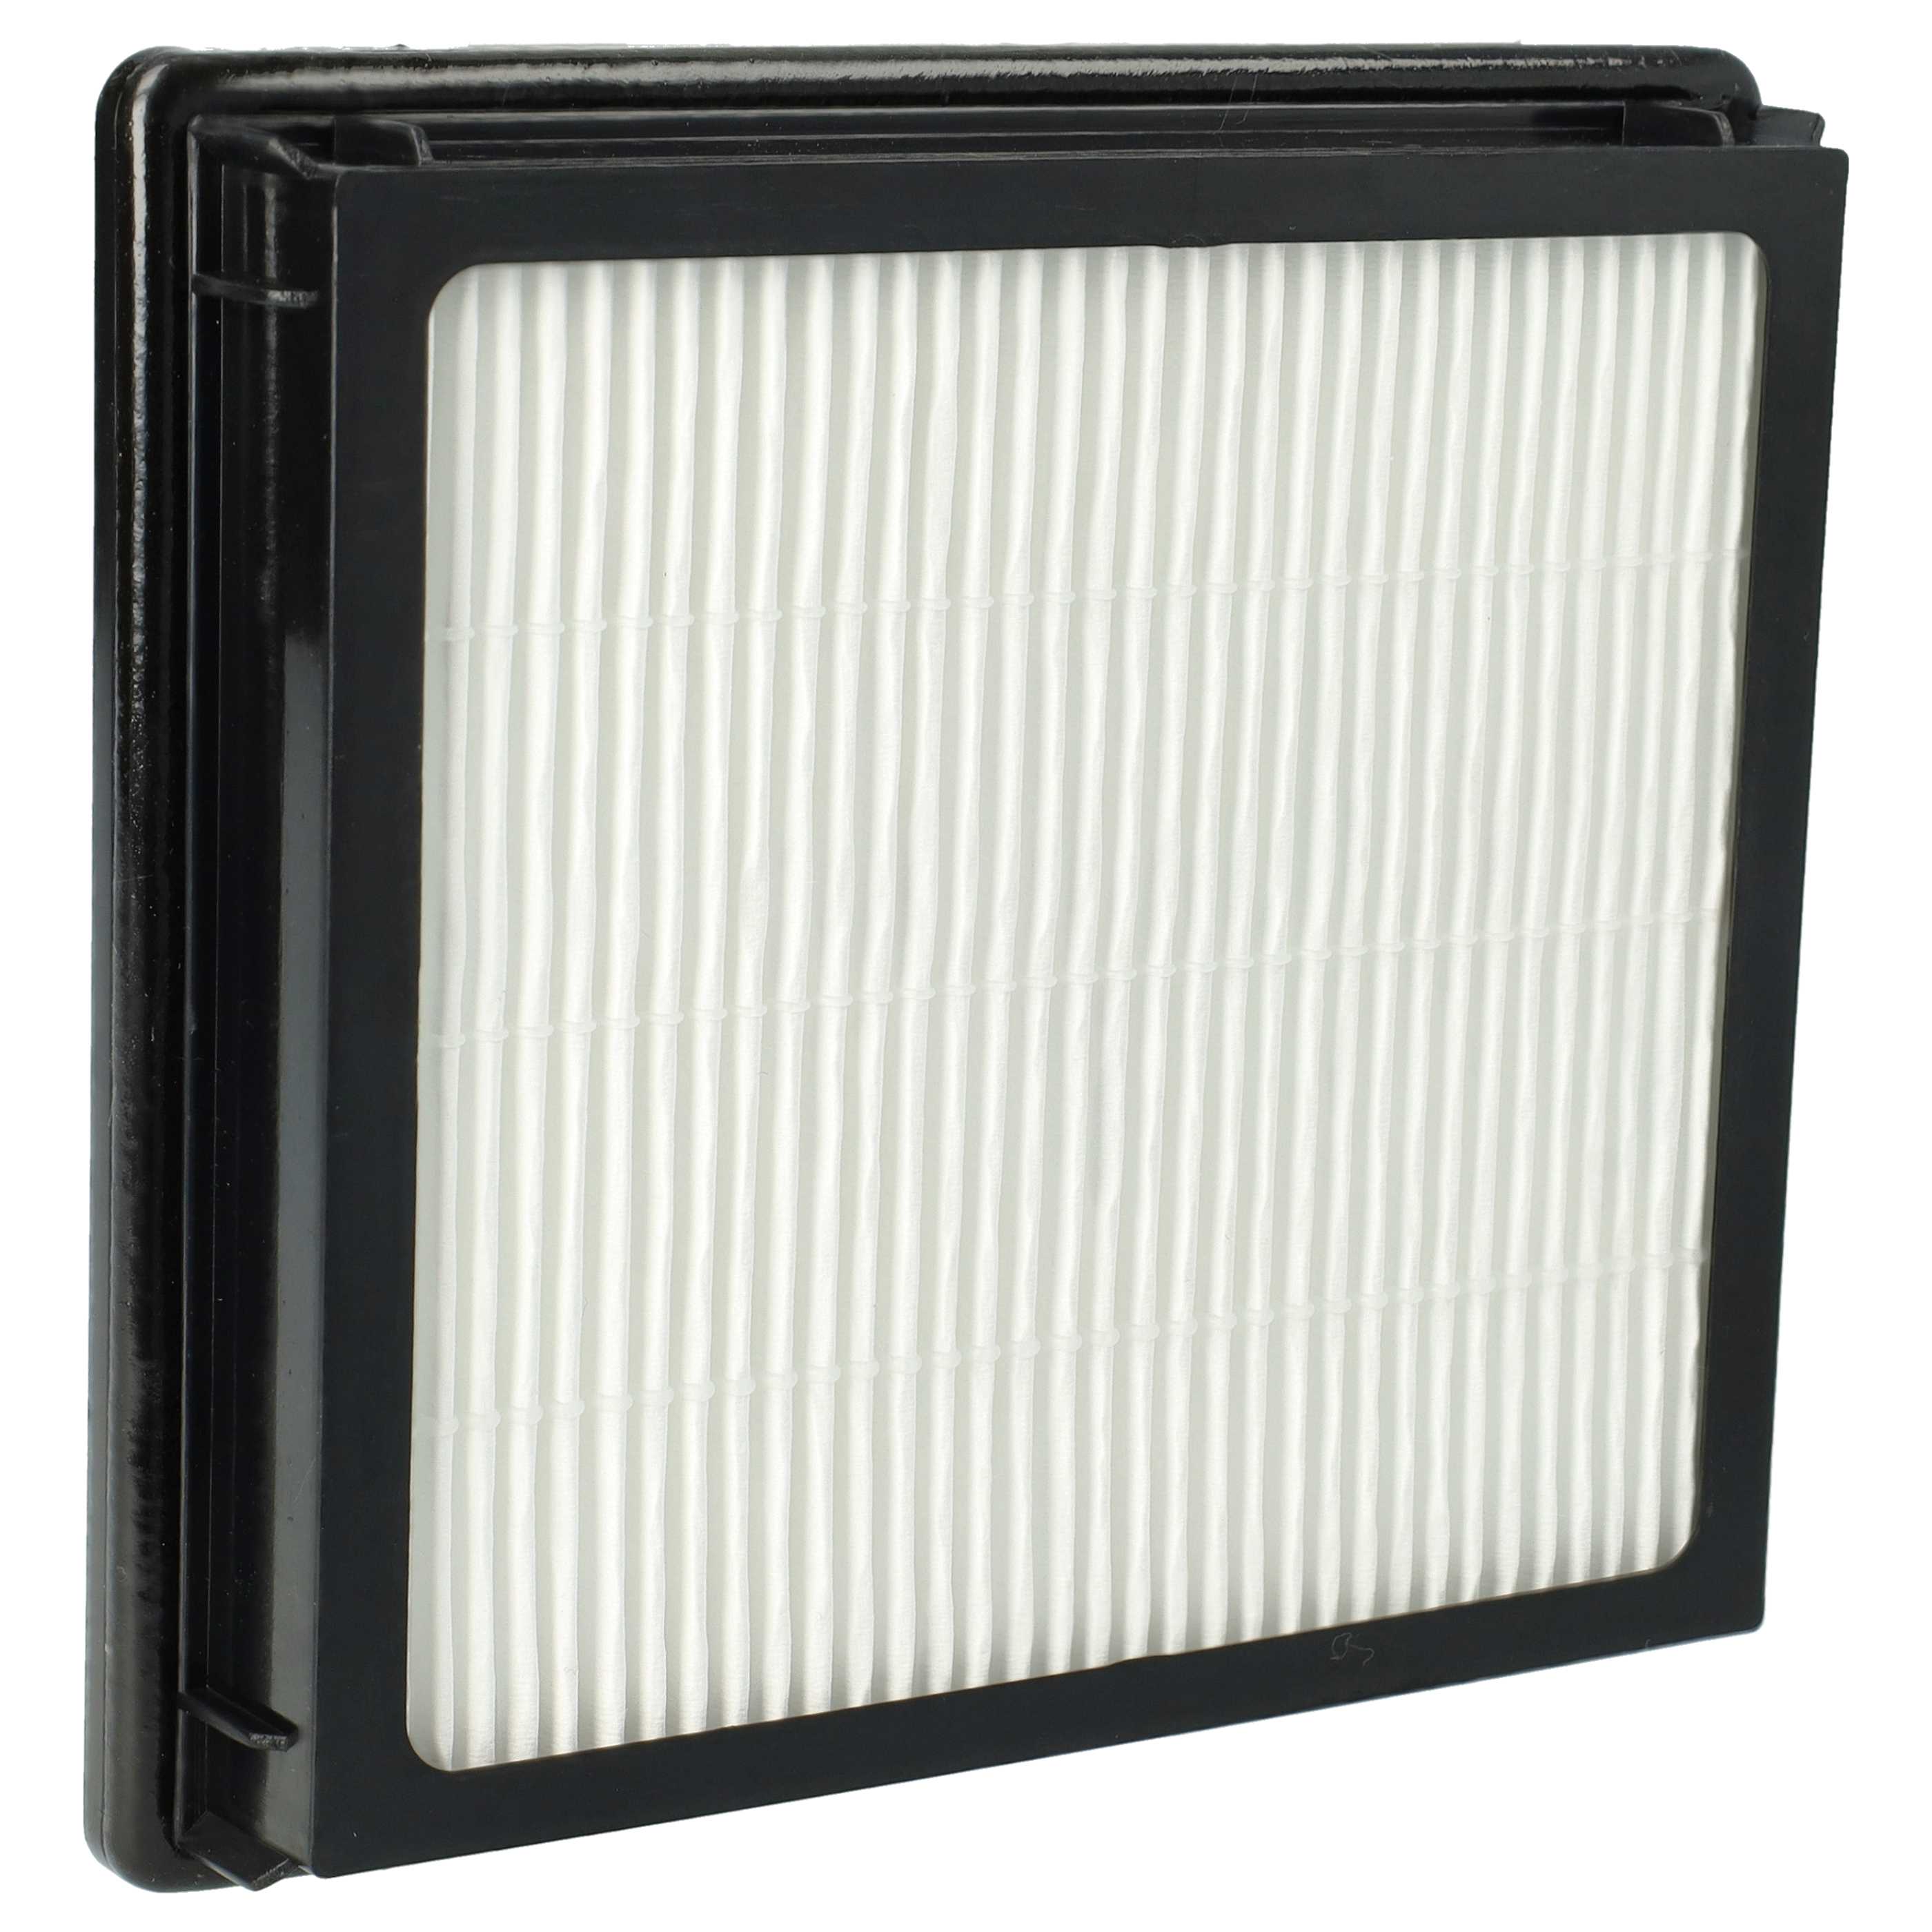 Filtro reemplaza Nilfisk 21983000 para aspiradora - filtro Hepa negro / blanco